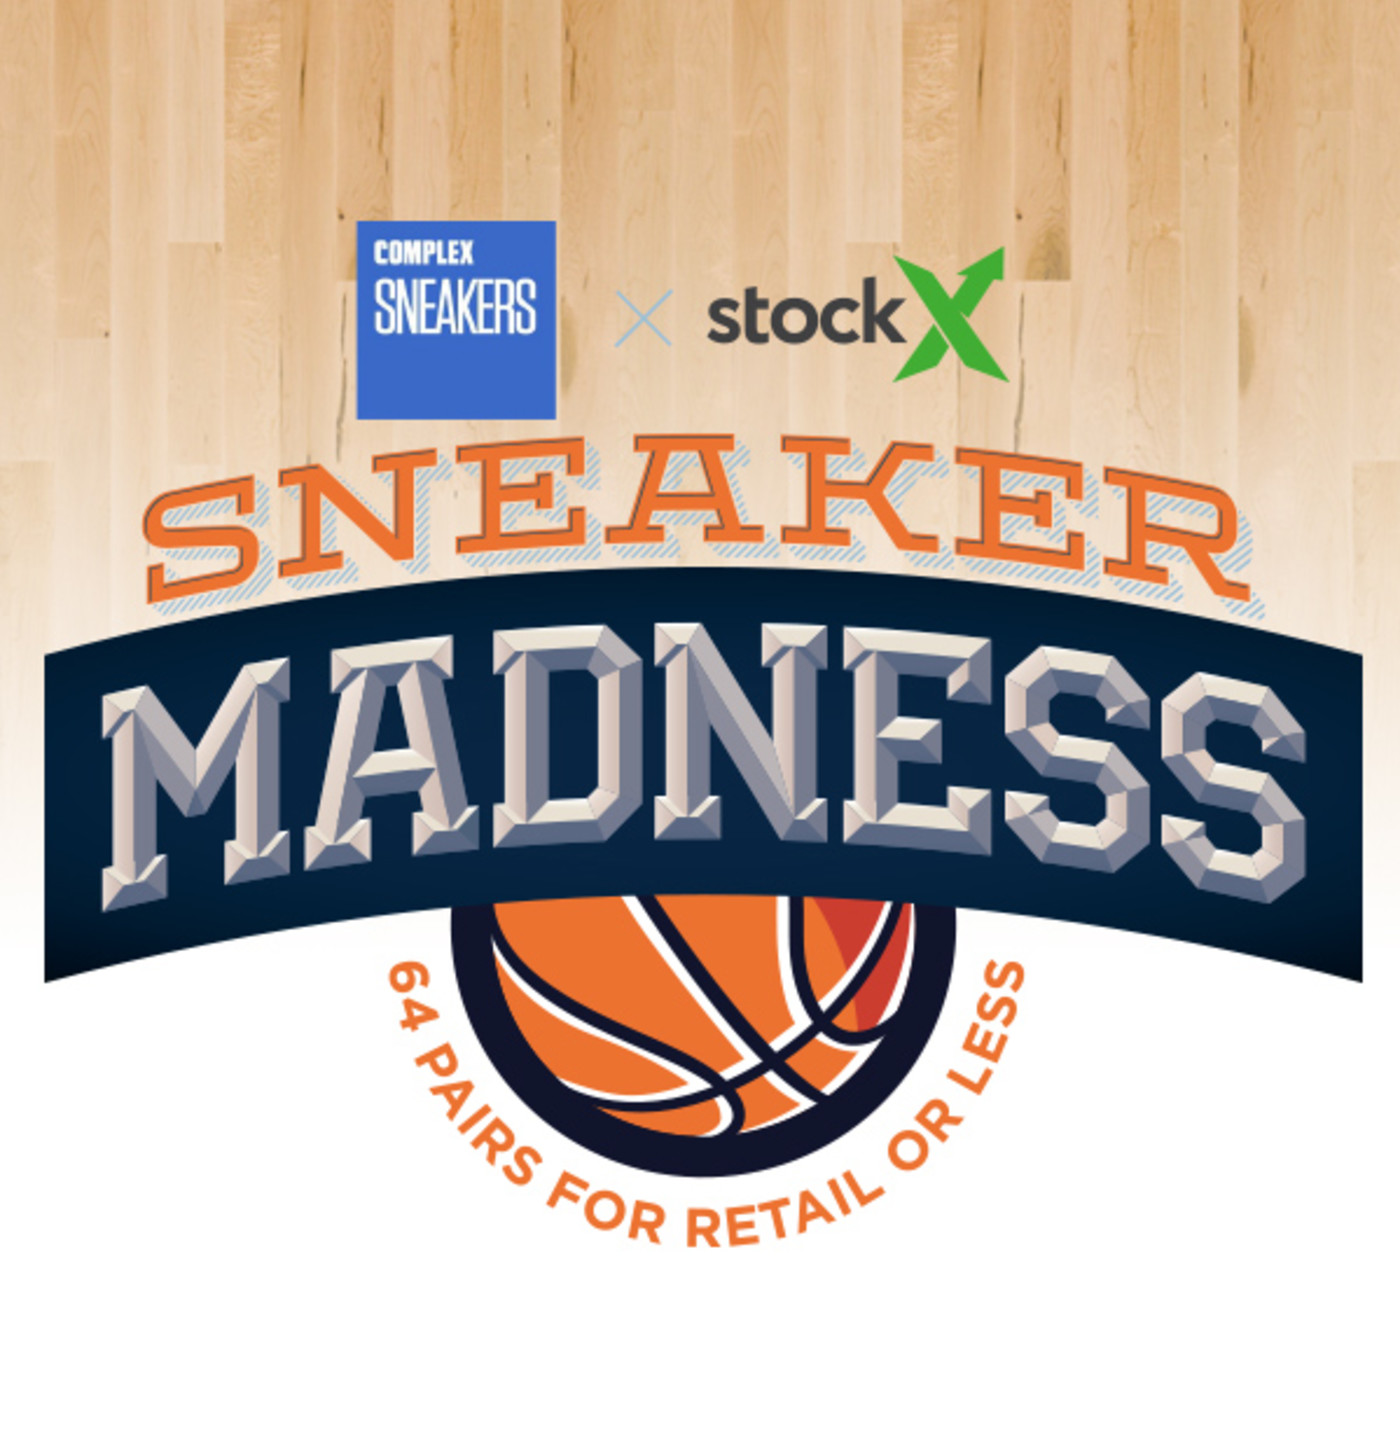 Complex Sneakers x StockX Sneaker Madness SemiFinals Complex